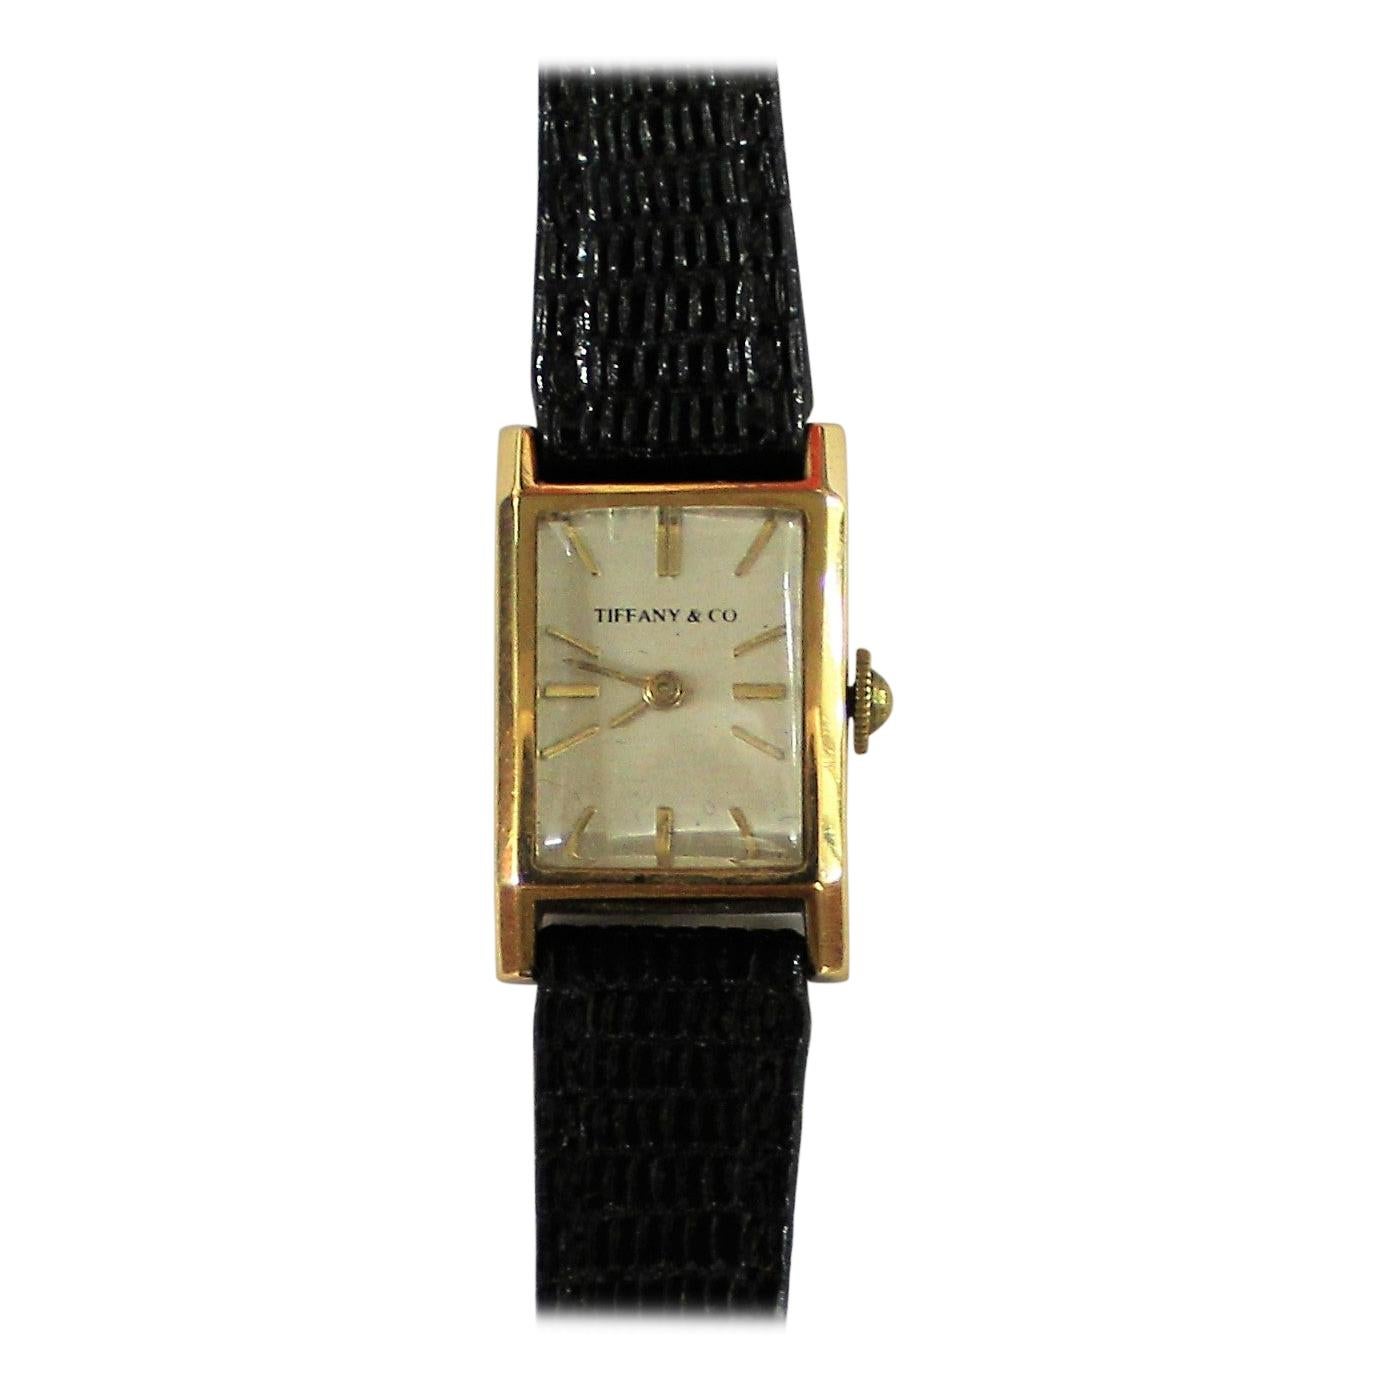 Tiffany & Co. Ladies 18-Carat Gold Watch